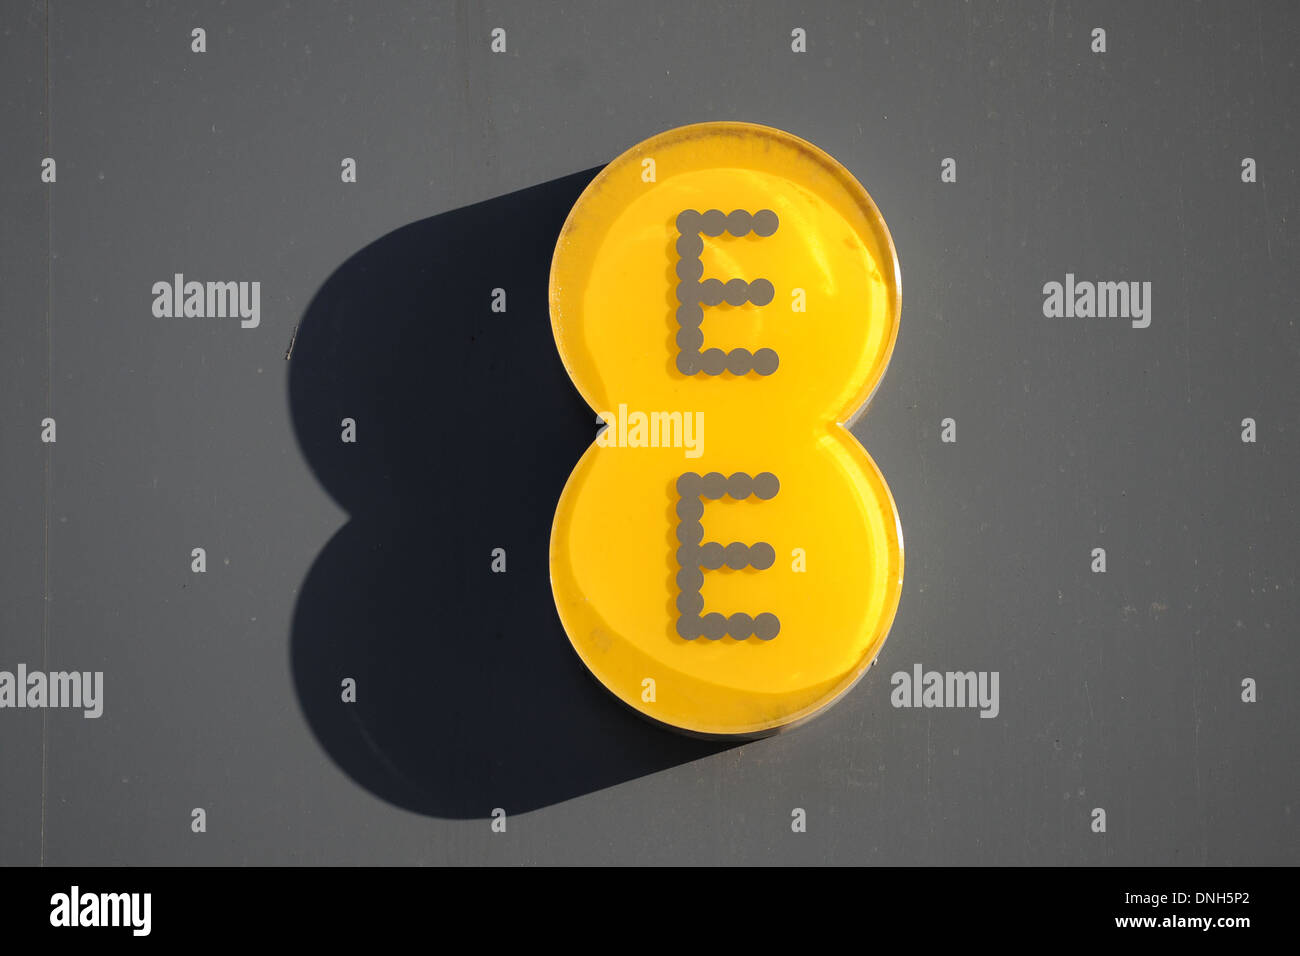 EE (formerly Everything Everywhere) phone network logo. Stock Photo